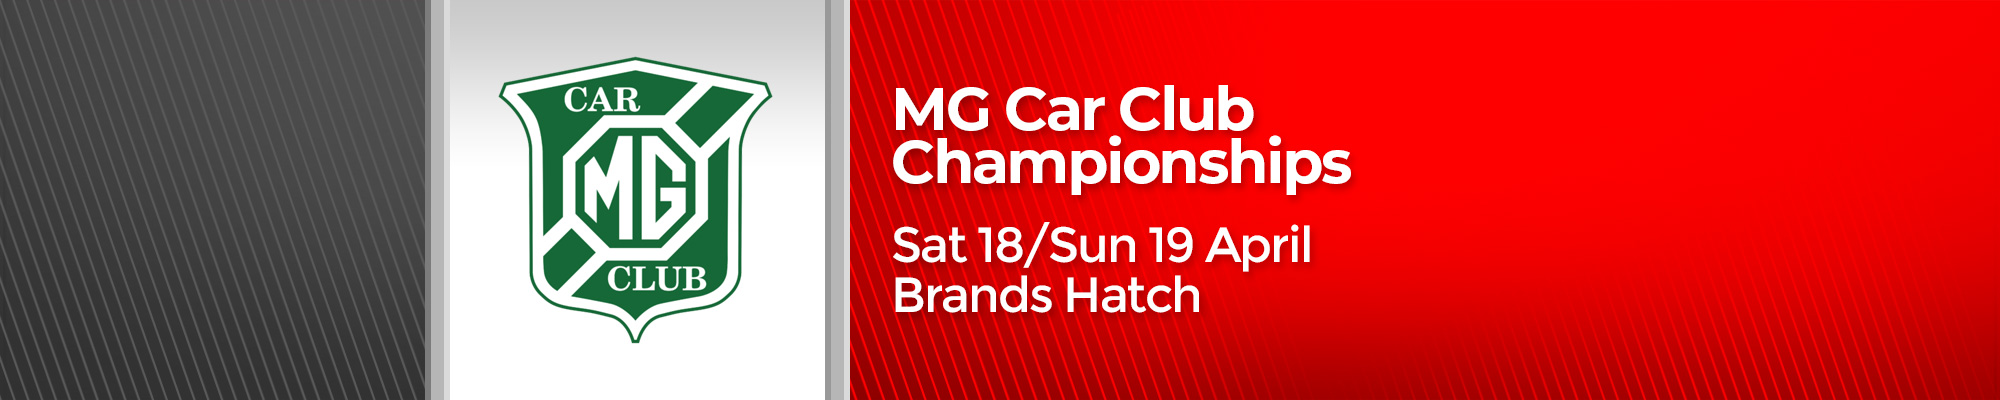  MG Car Club Championships - POSTPONED